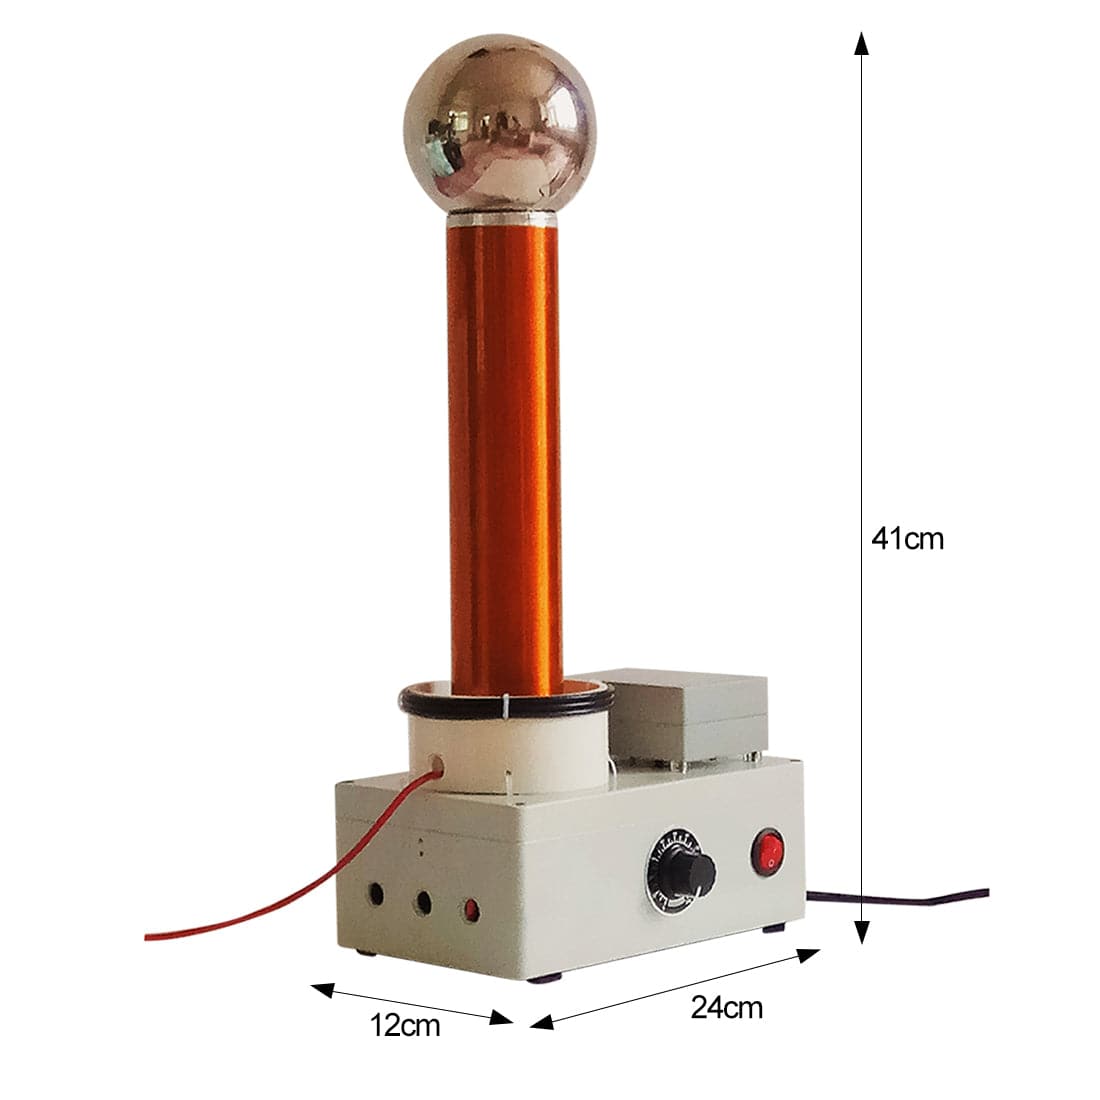 15cm Arc Tesla Coil Demonstration of High Frequency AC Wireless Transmission Lightning Simulator - US Plug - stirlingkit